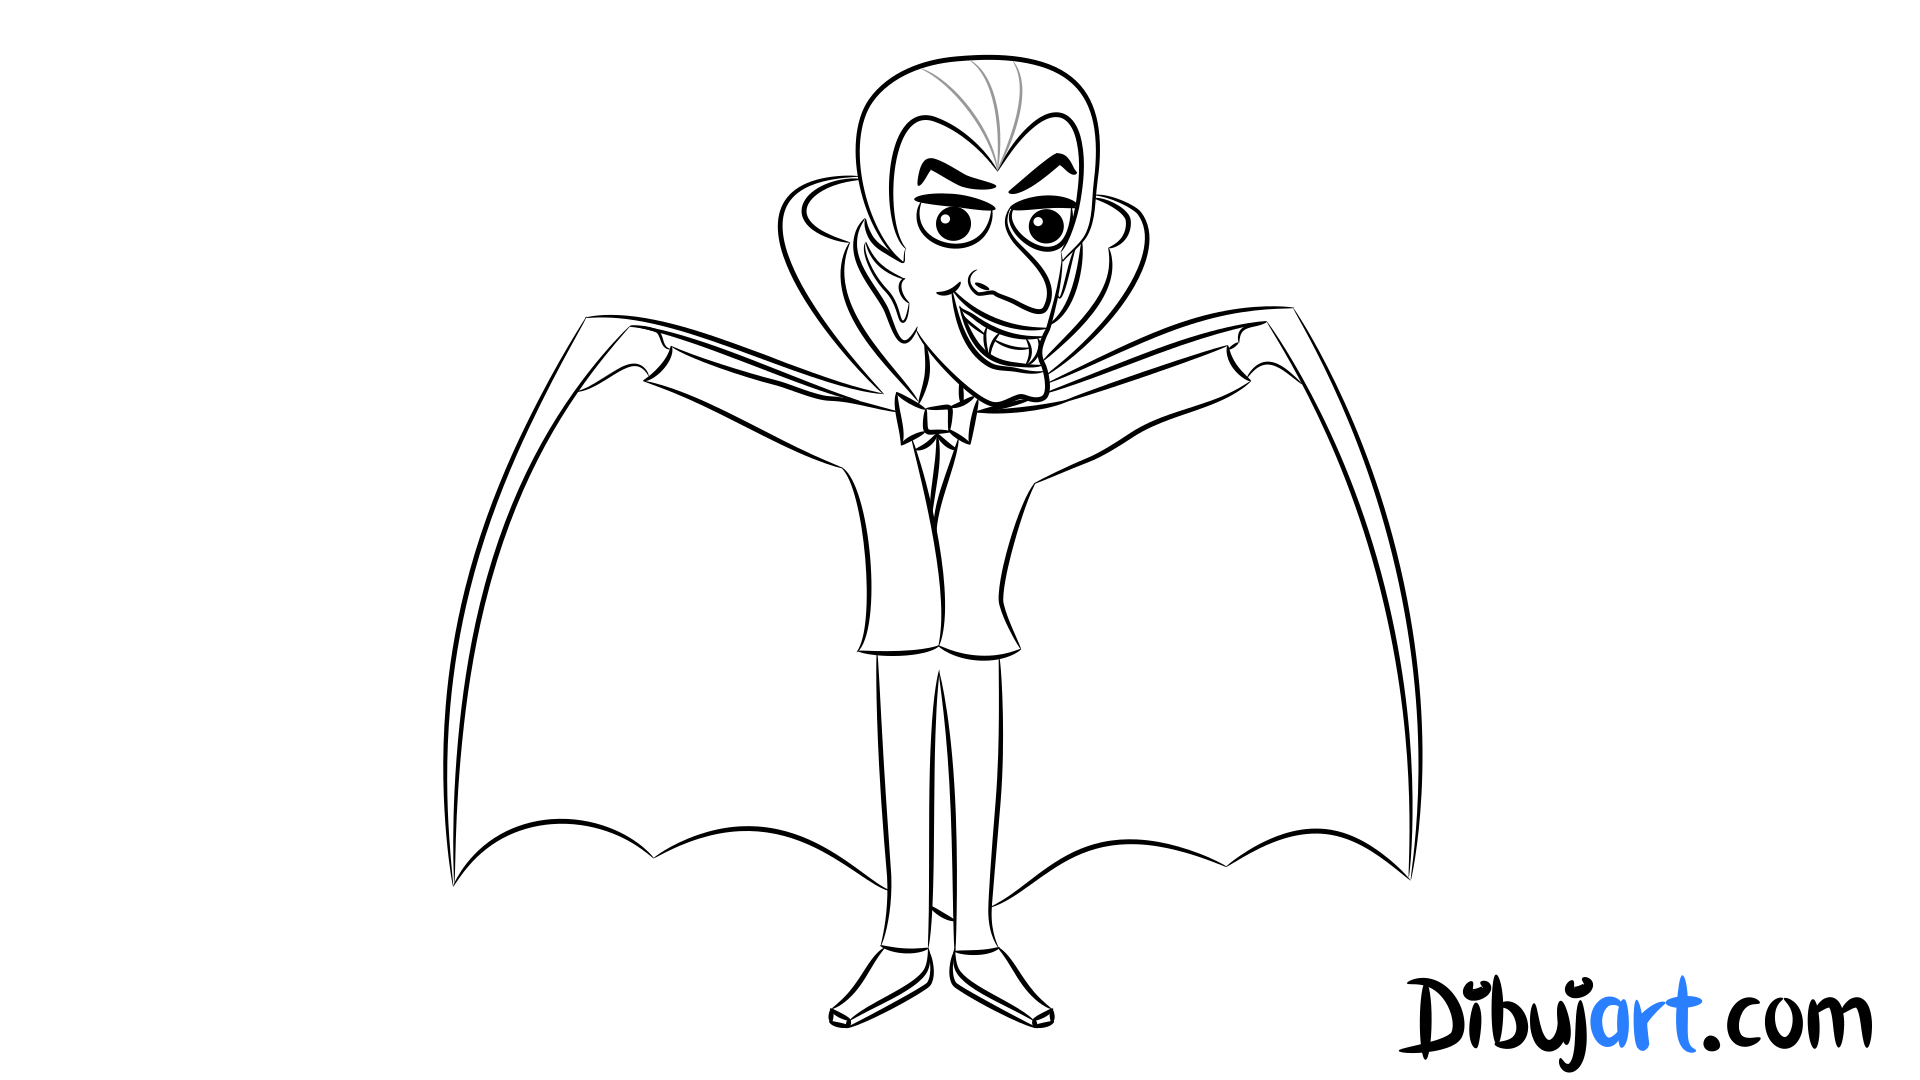 Cómo dibujar Drácula el legendario vampiro paso a paso | dibujart.com